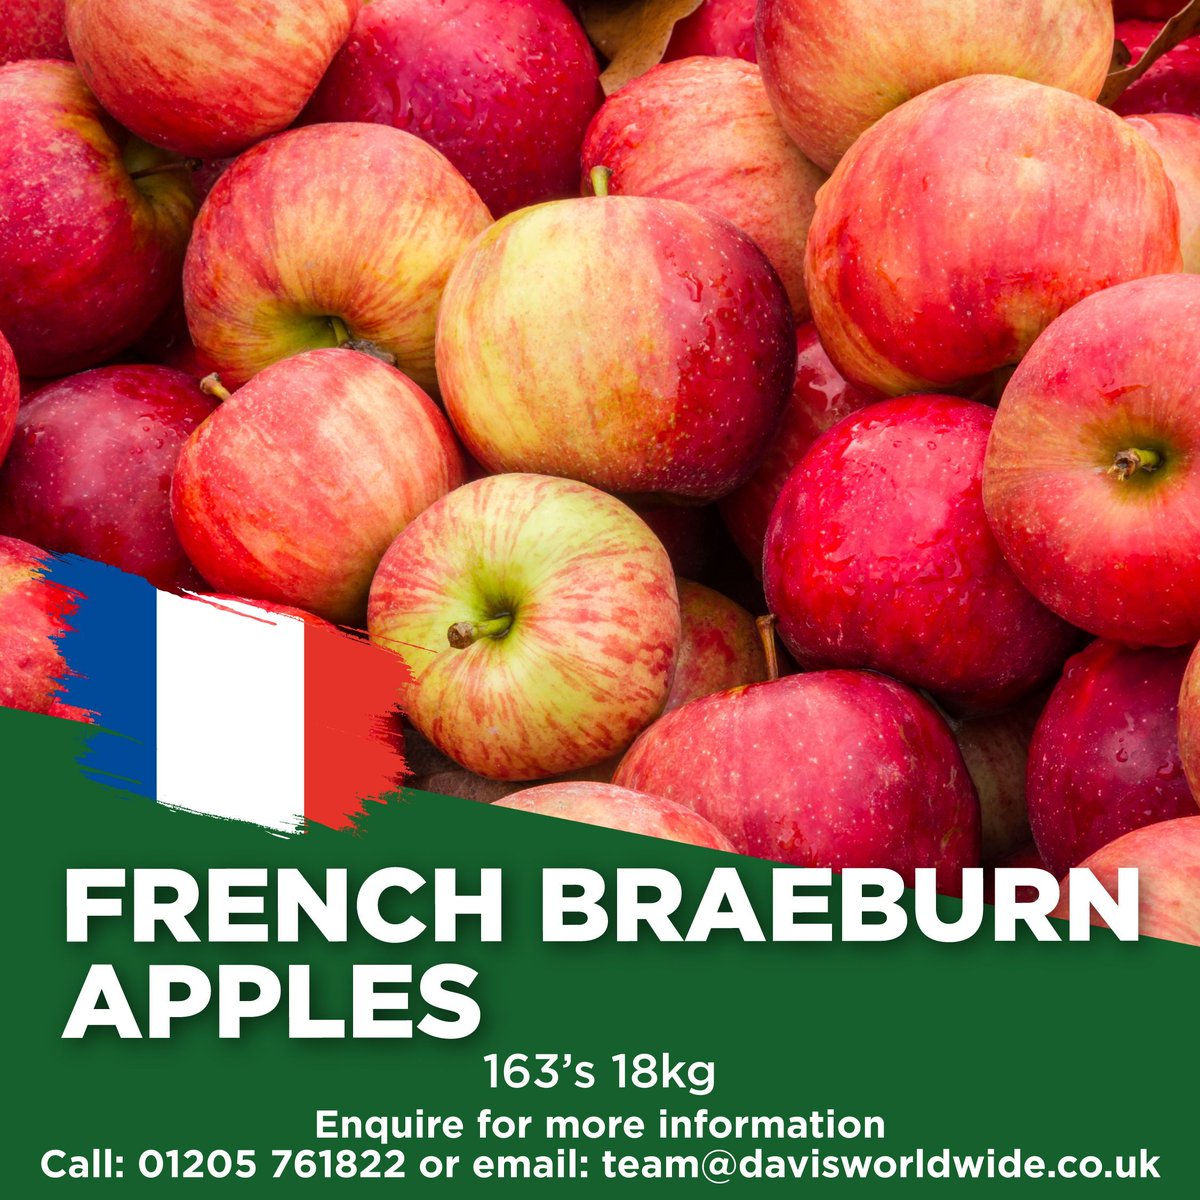 Delicious French Braeburn  Apples. Absolutely amazing...

Order yours today...call 01205 761822 or email team@davisworldwide.co.uk

#apple #apples #fruit #freshapples #qualityapples #fruitlovers #fruits #snacks #snack #wholesaler #freshfruits #foodporn #fruitporn #fruitwholesale